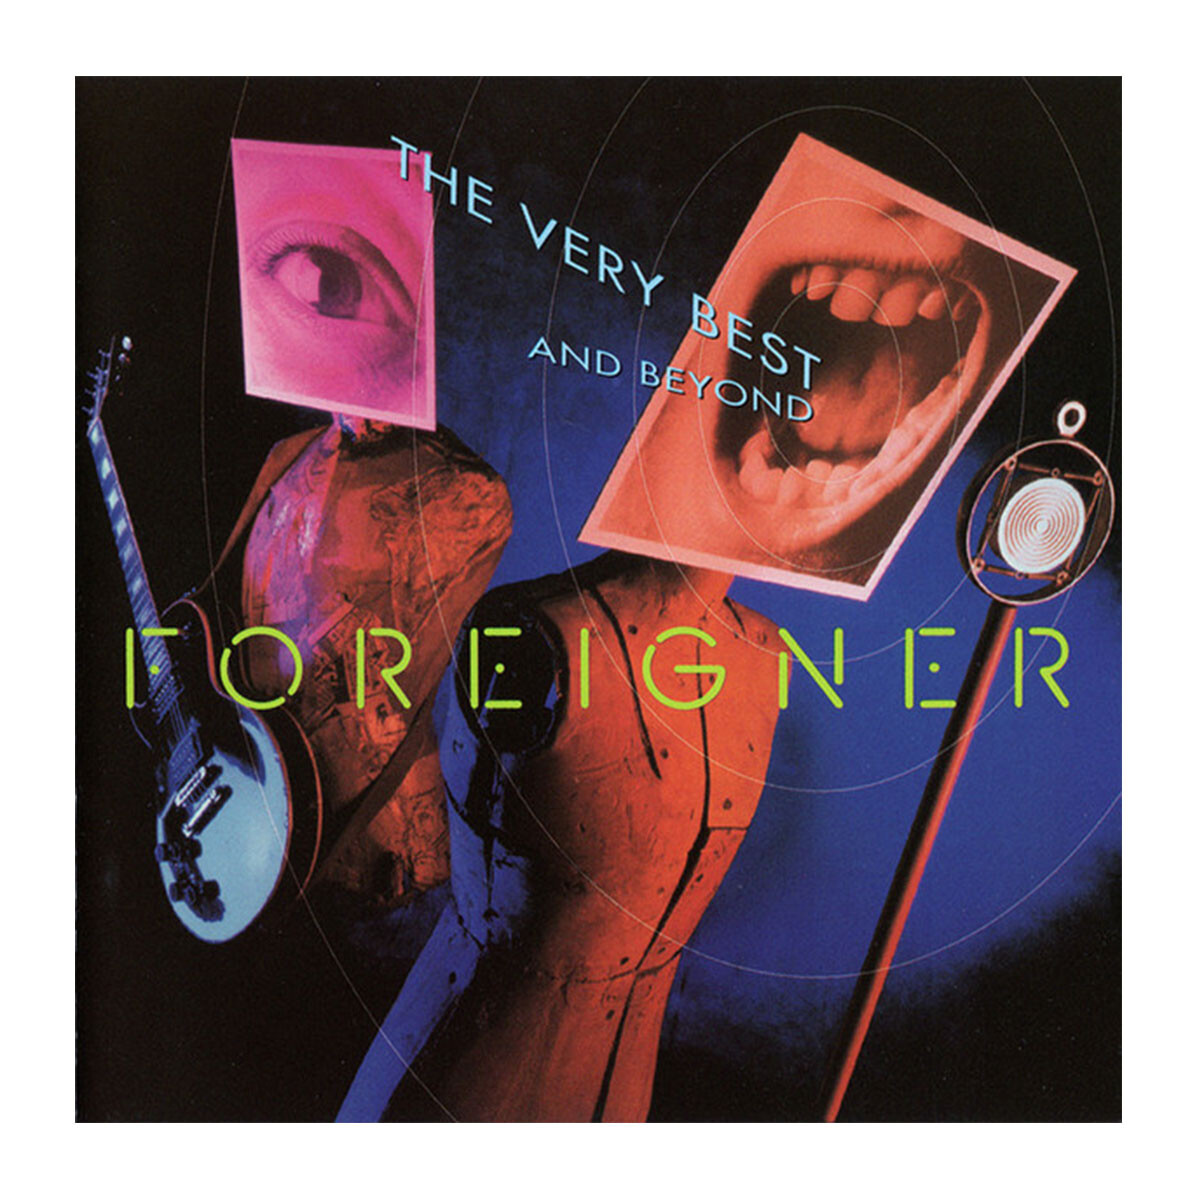 Foreigner - Very Best & Beyond - Cd 